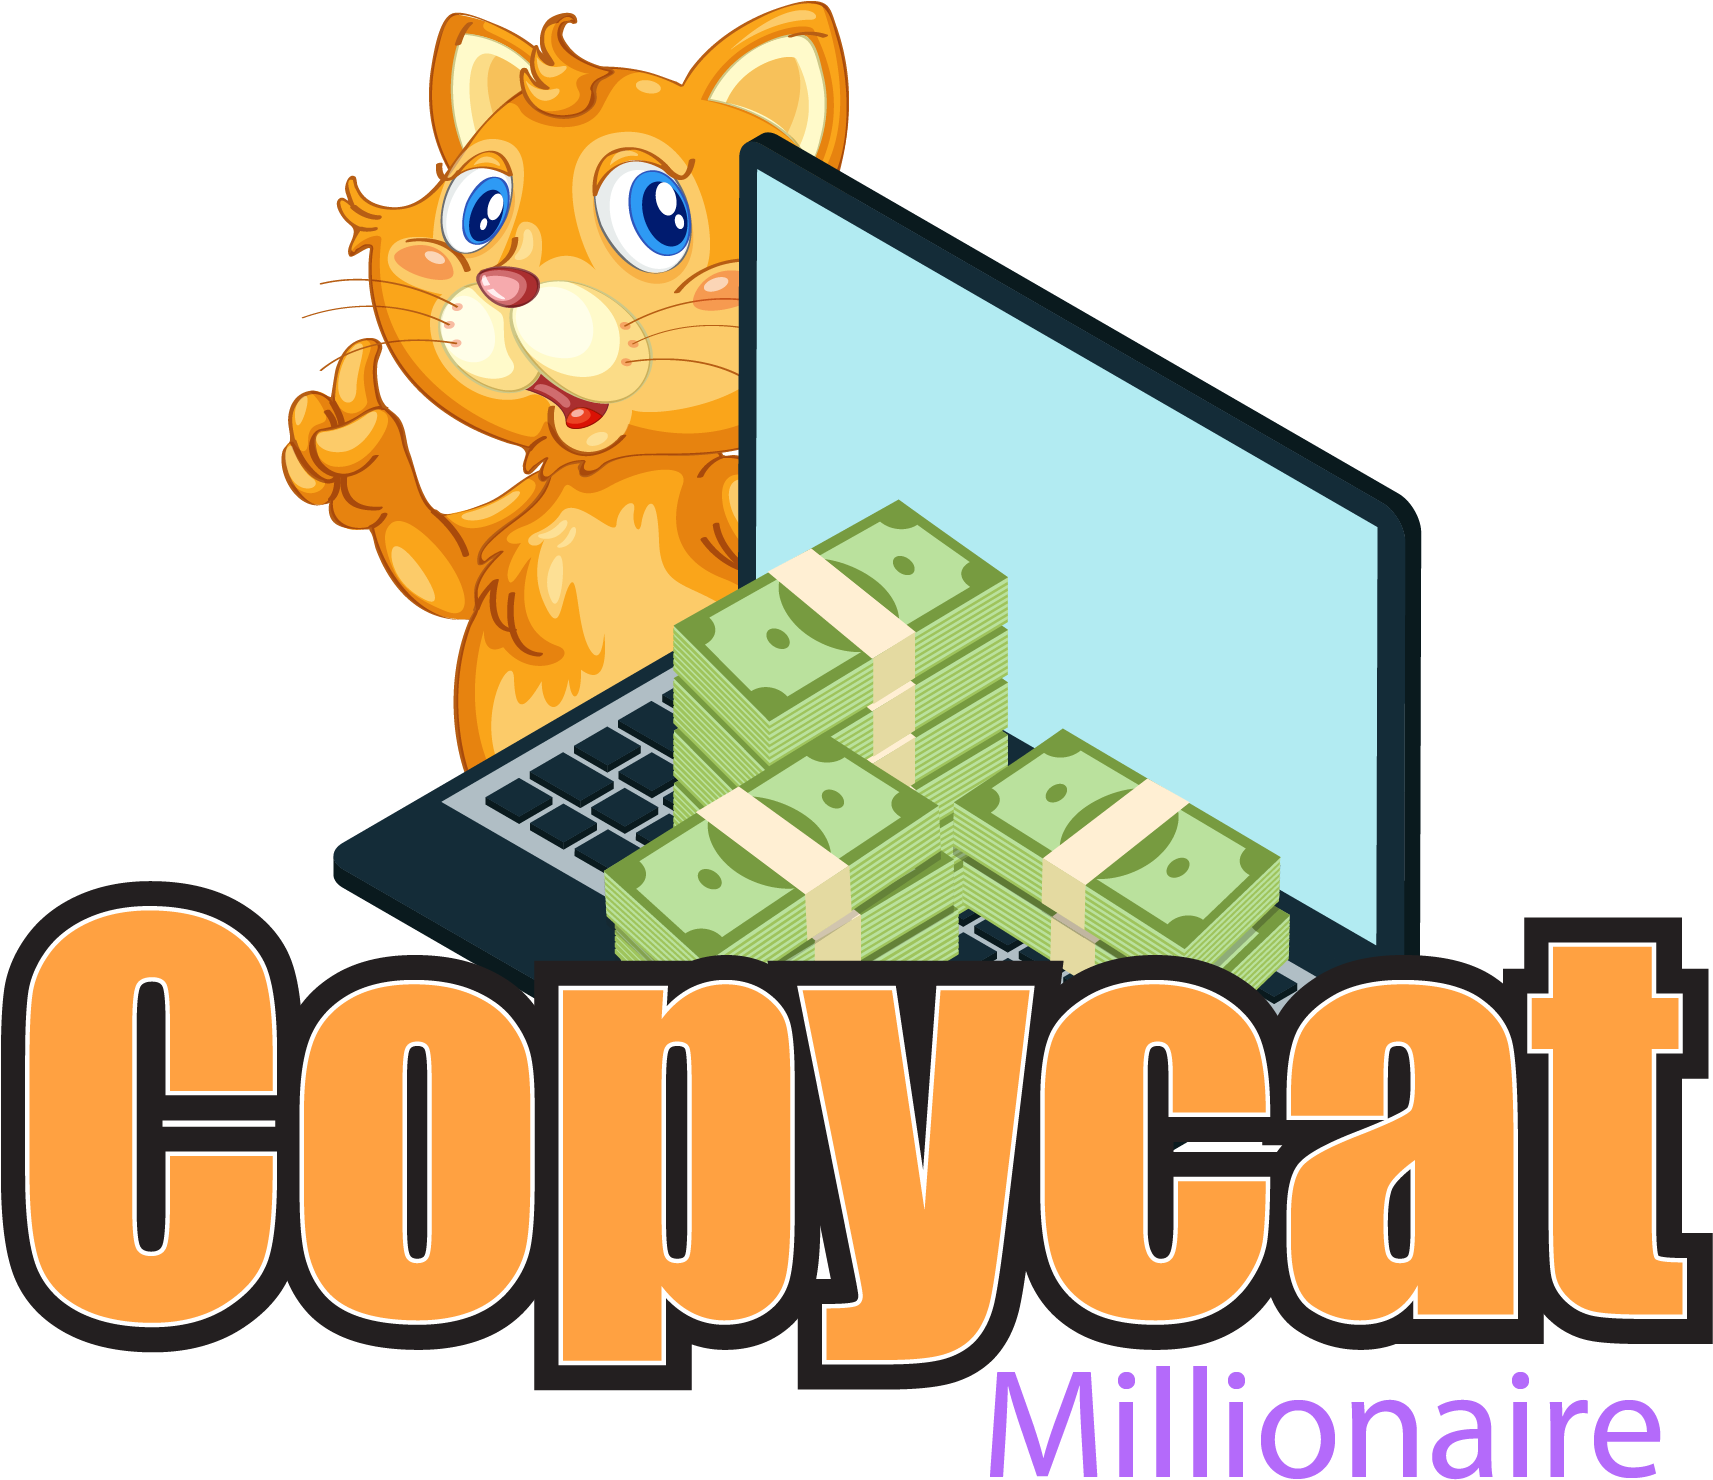 Copycat Millionaire - Cartoon (1712x1515)